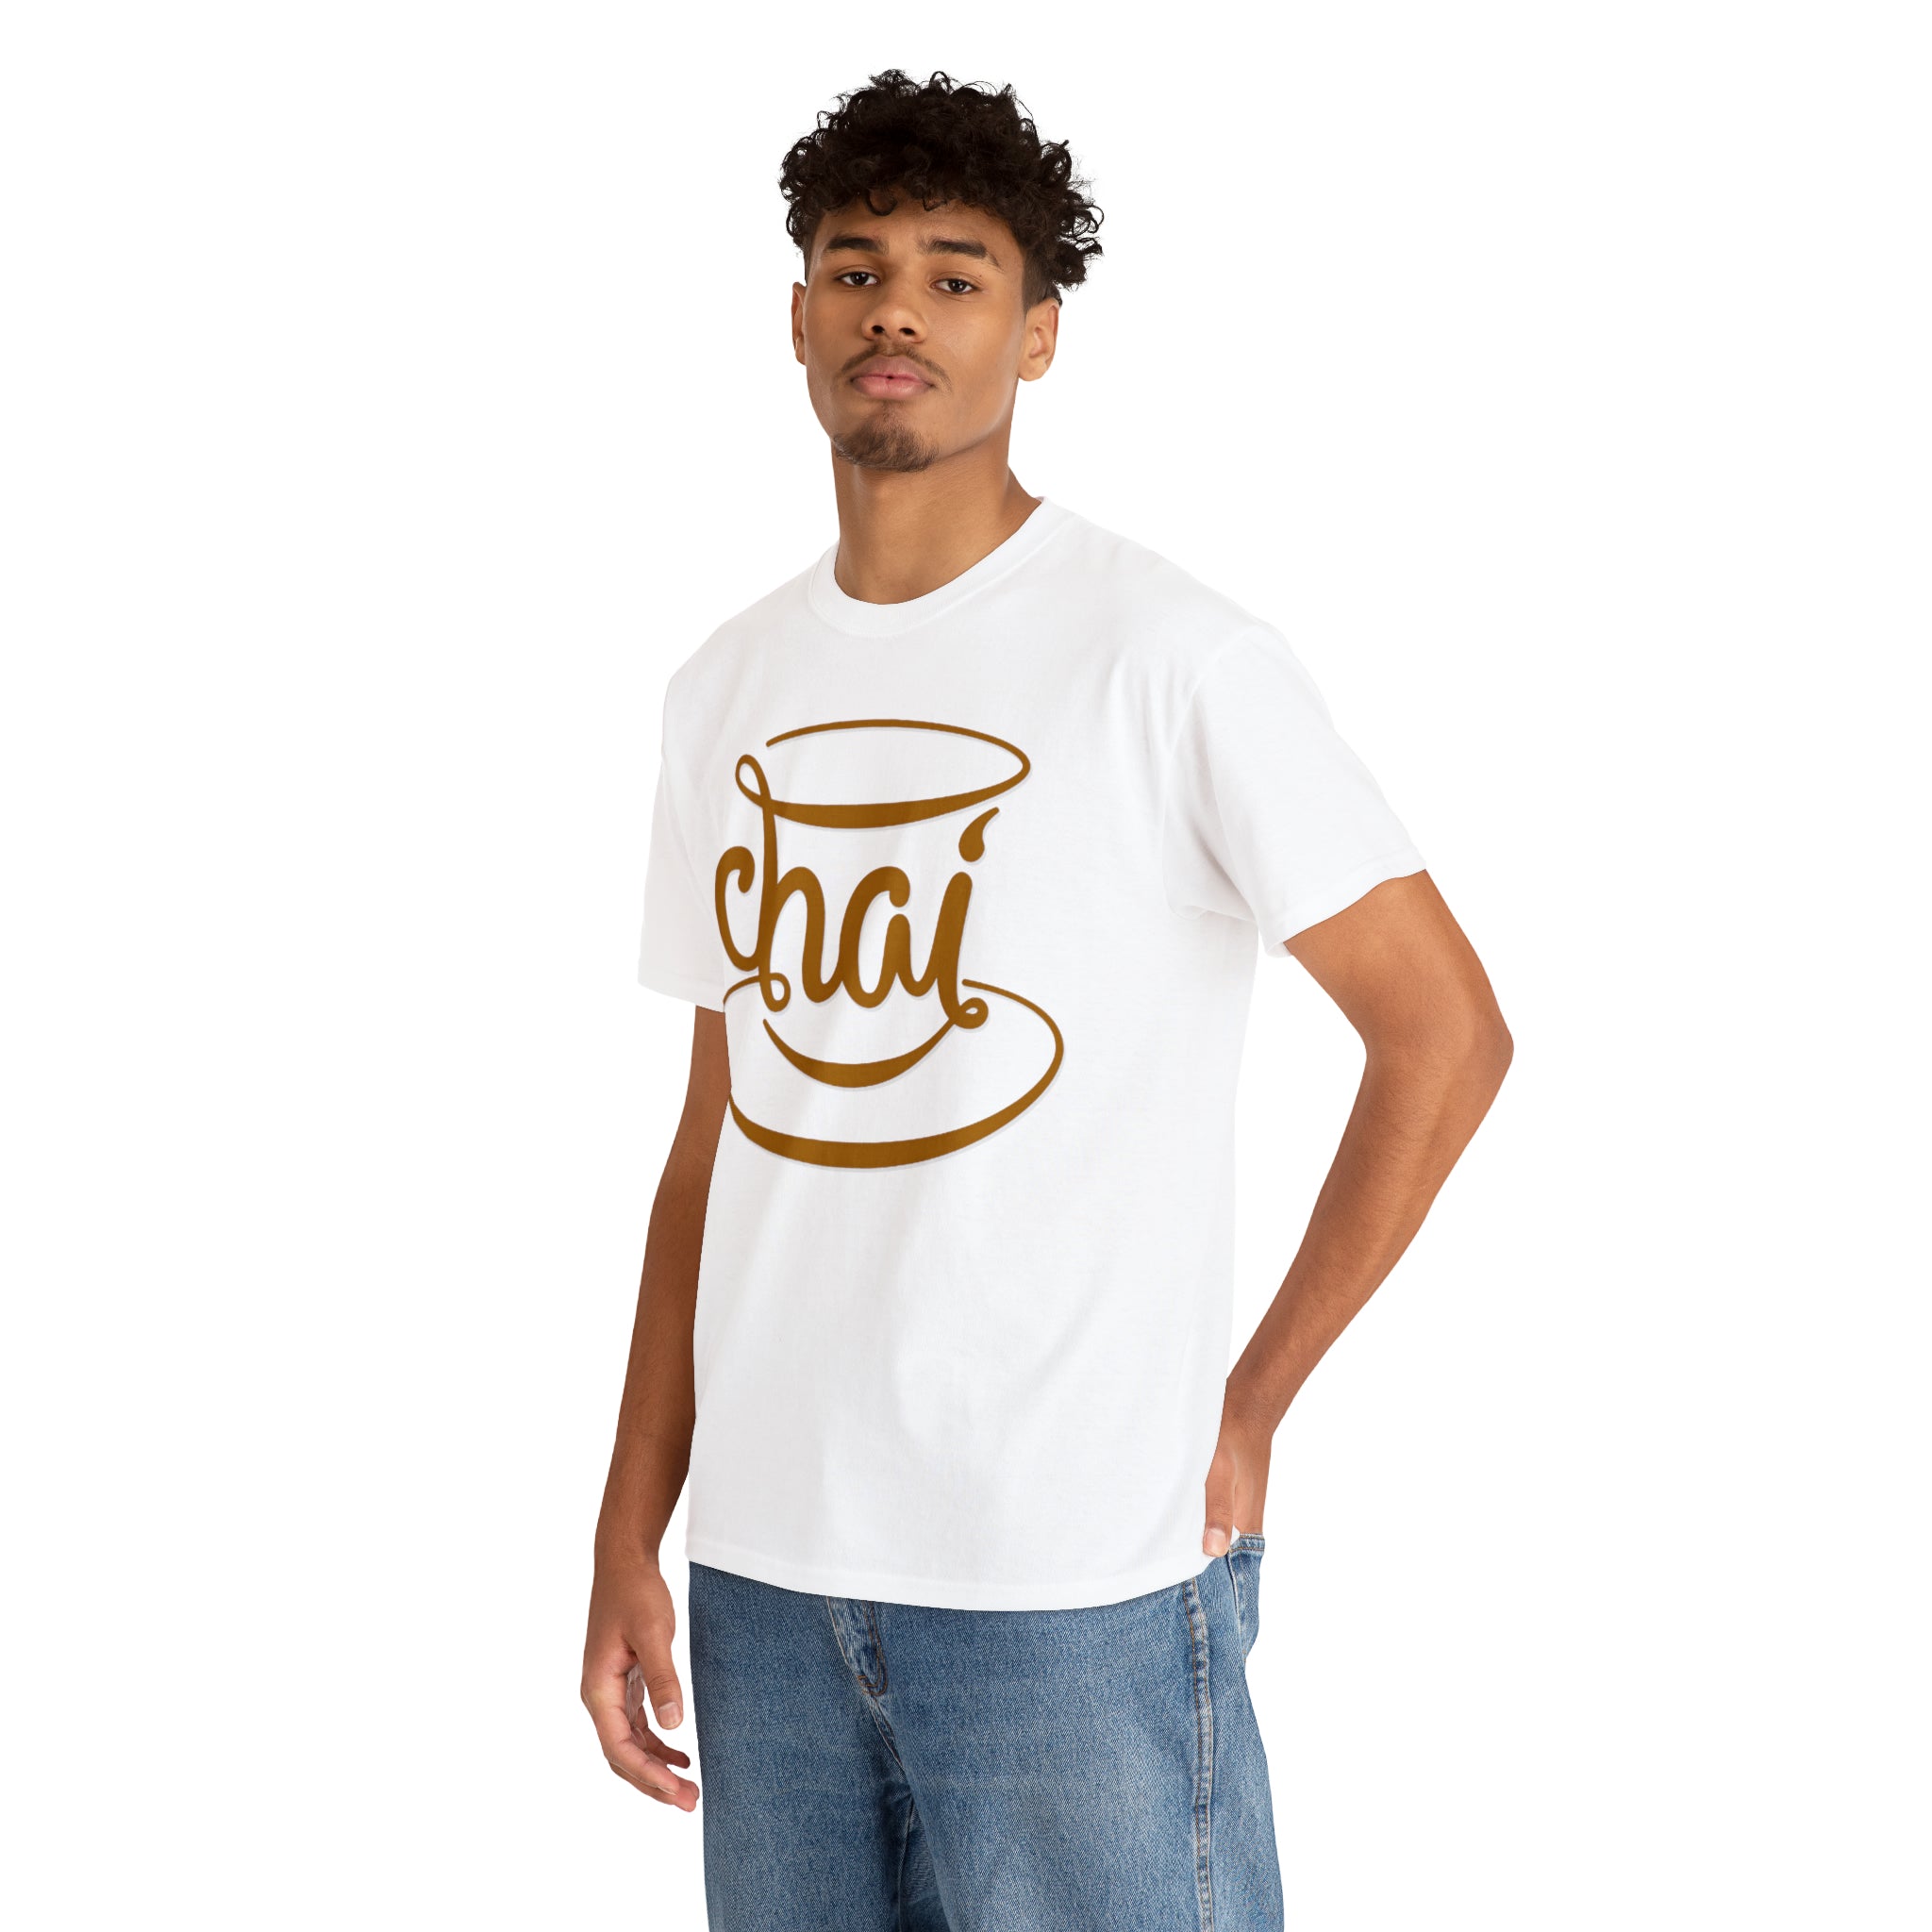 Chai T-Shirt Design by C&C